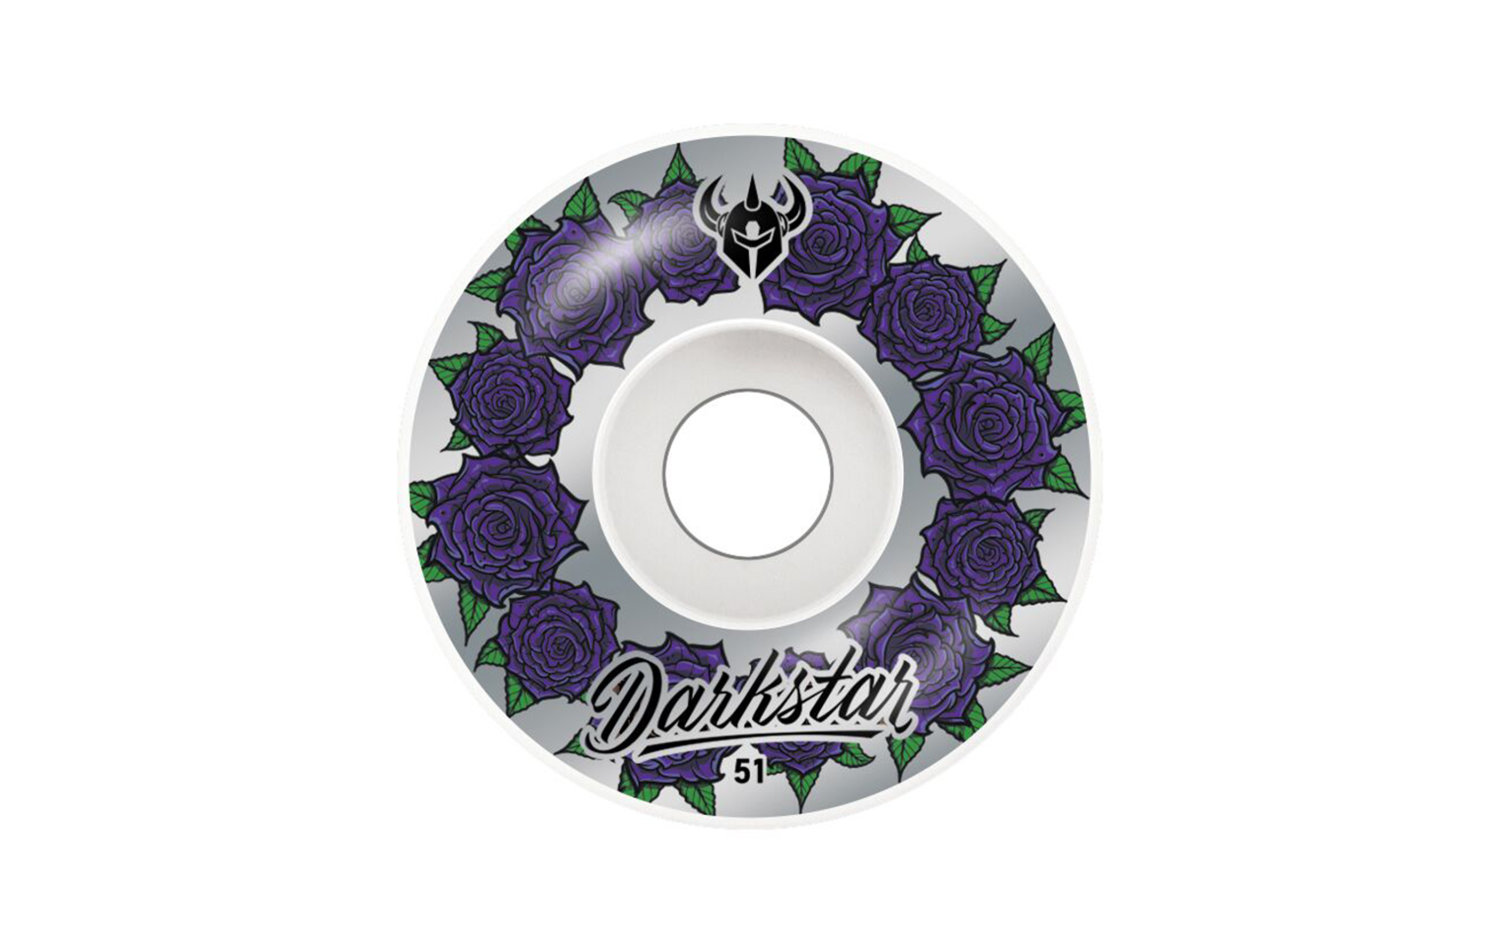 Darkstar In Bloom Wheels 51mm (10112338)